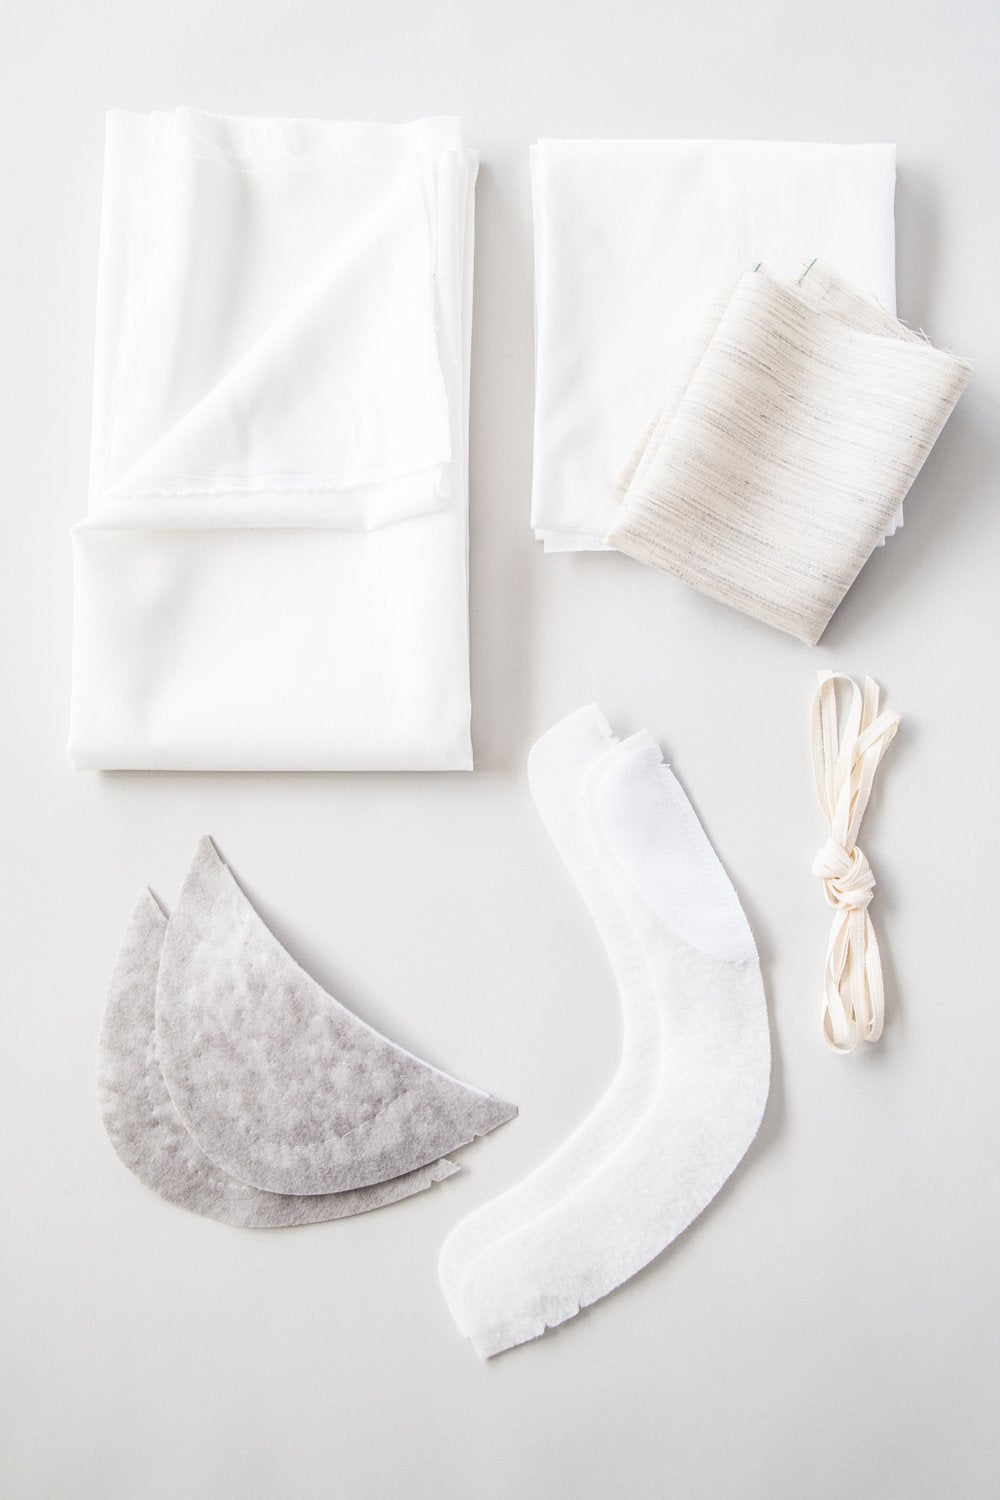 Tailoring Supplies Kit | Core Fabrics